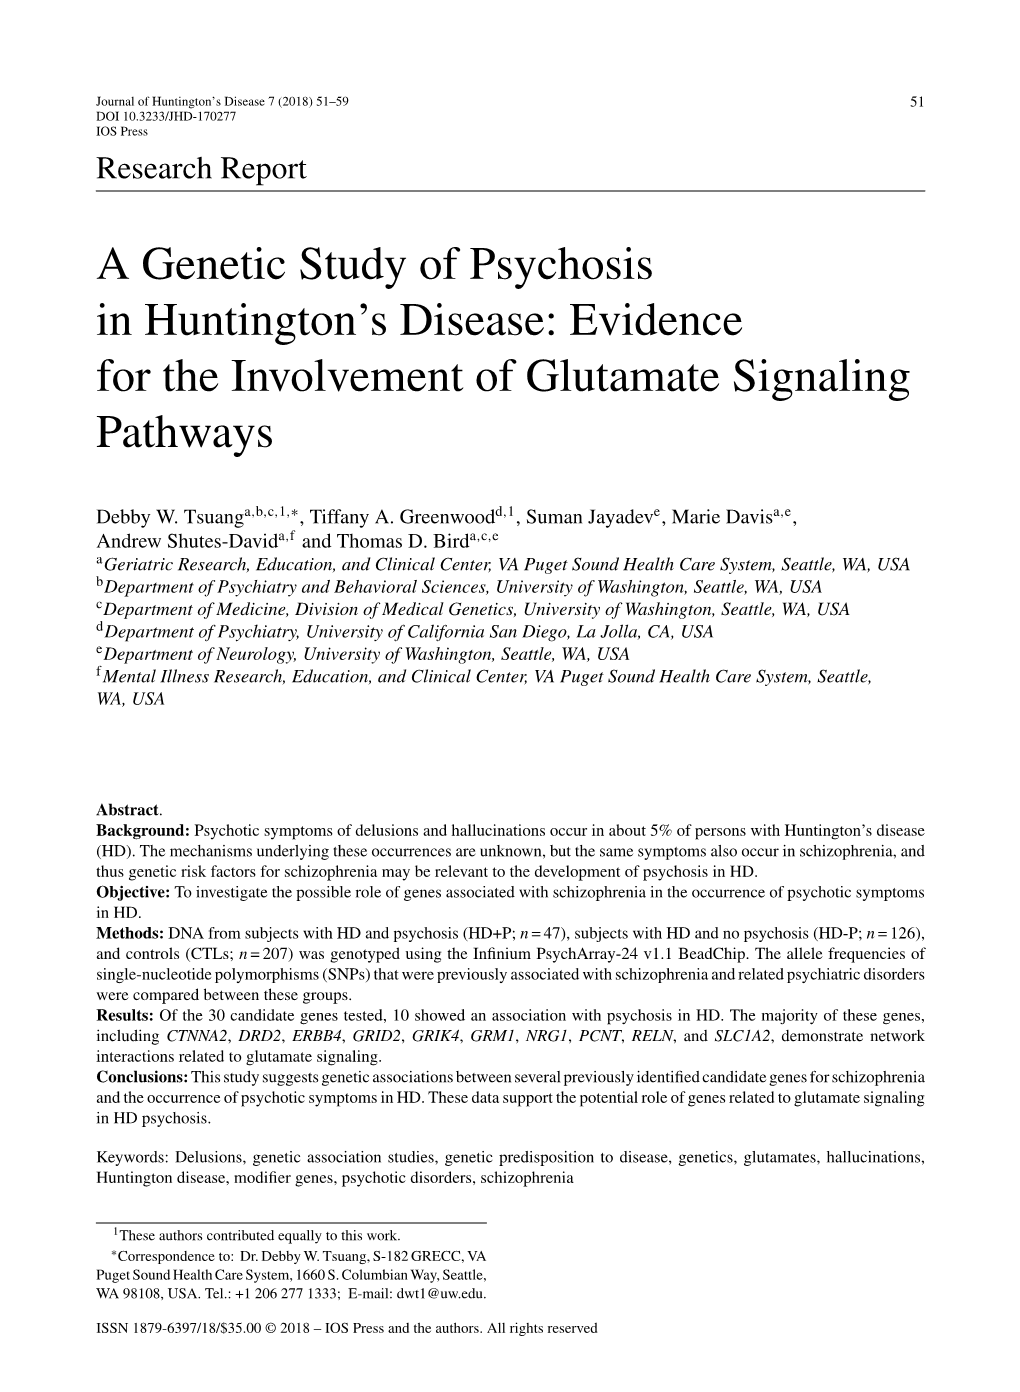 A Genetic Study of Psychosis in Huntington's Disease